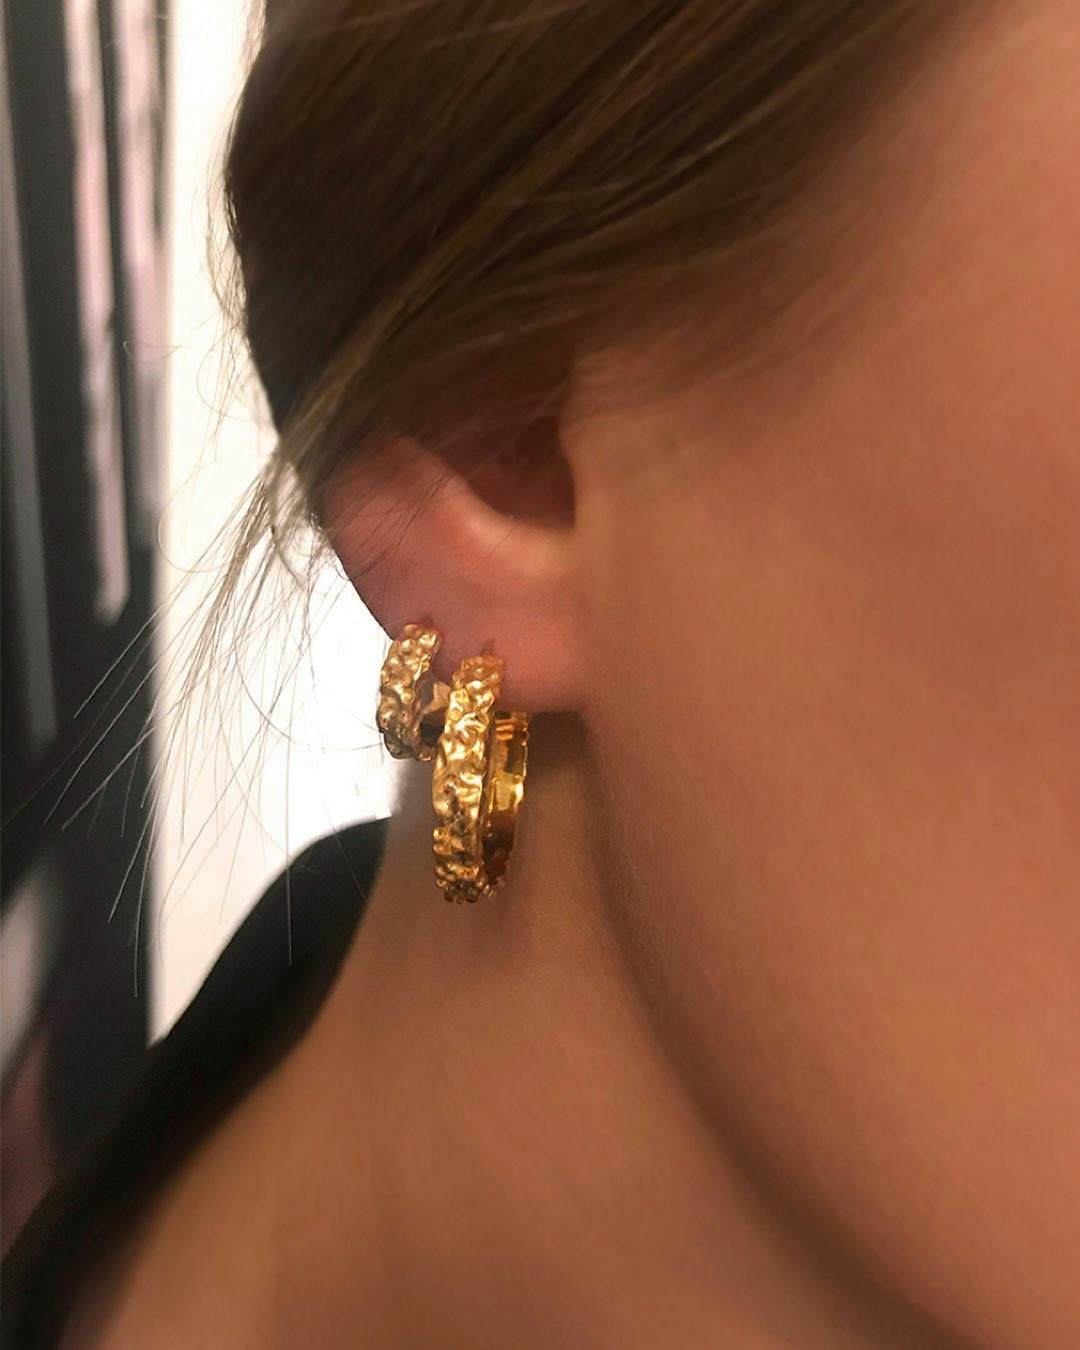 Aio Small earrings von Maanesten in Vergoldet-Silber Sterling 925